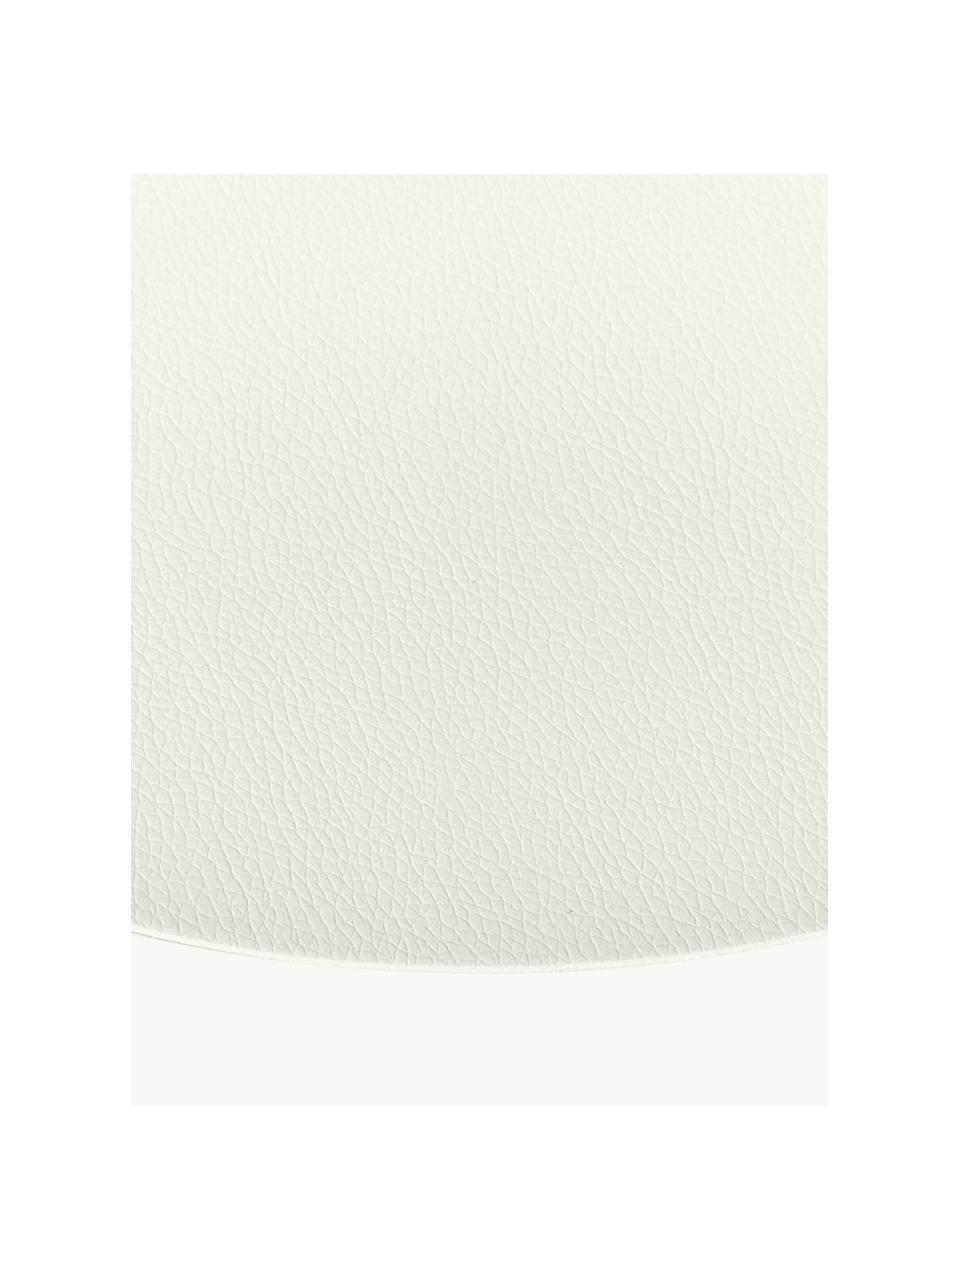 Tovaglietta americana rotonda in similpelle Pik 2 pz, Plastica (PVC), Bianco latte, Ø 38 cm